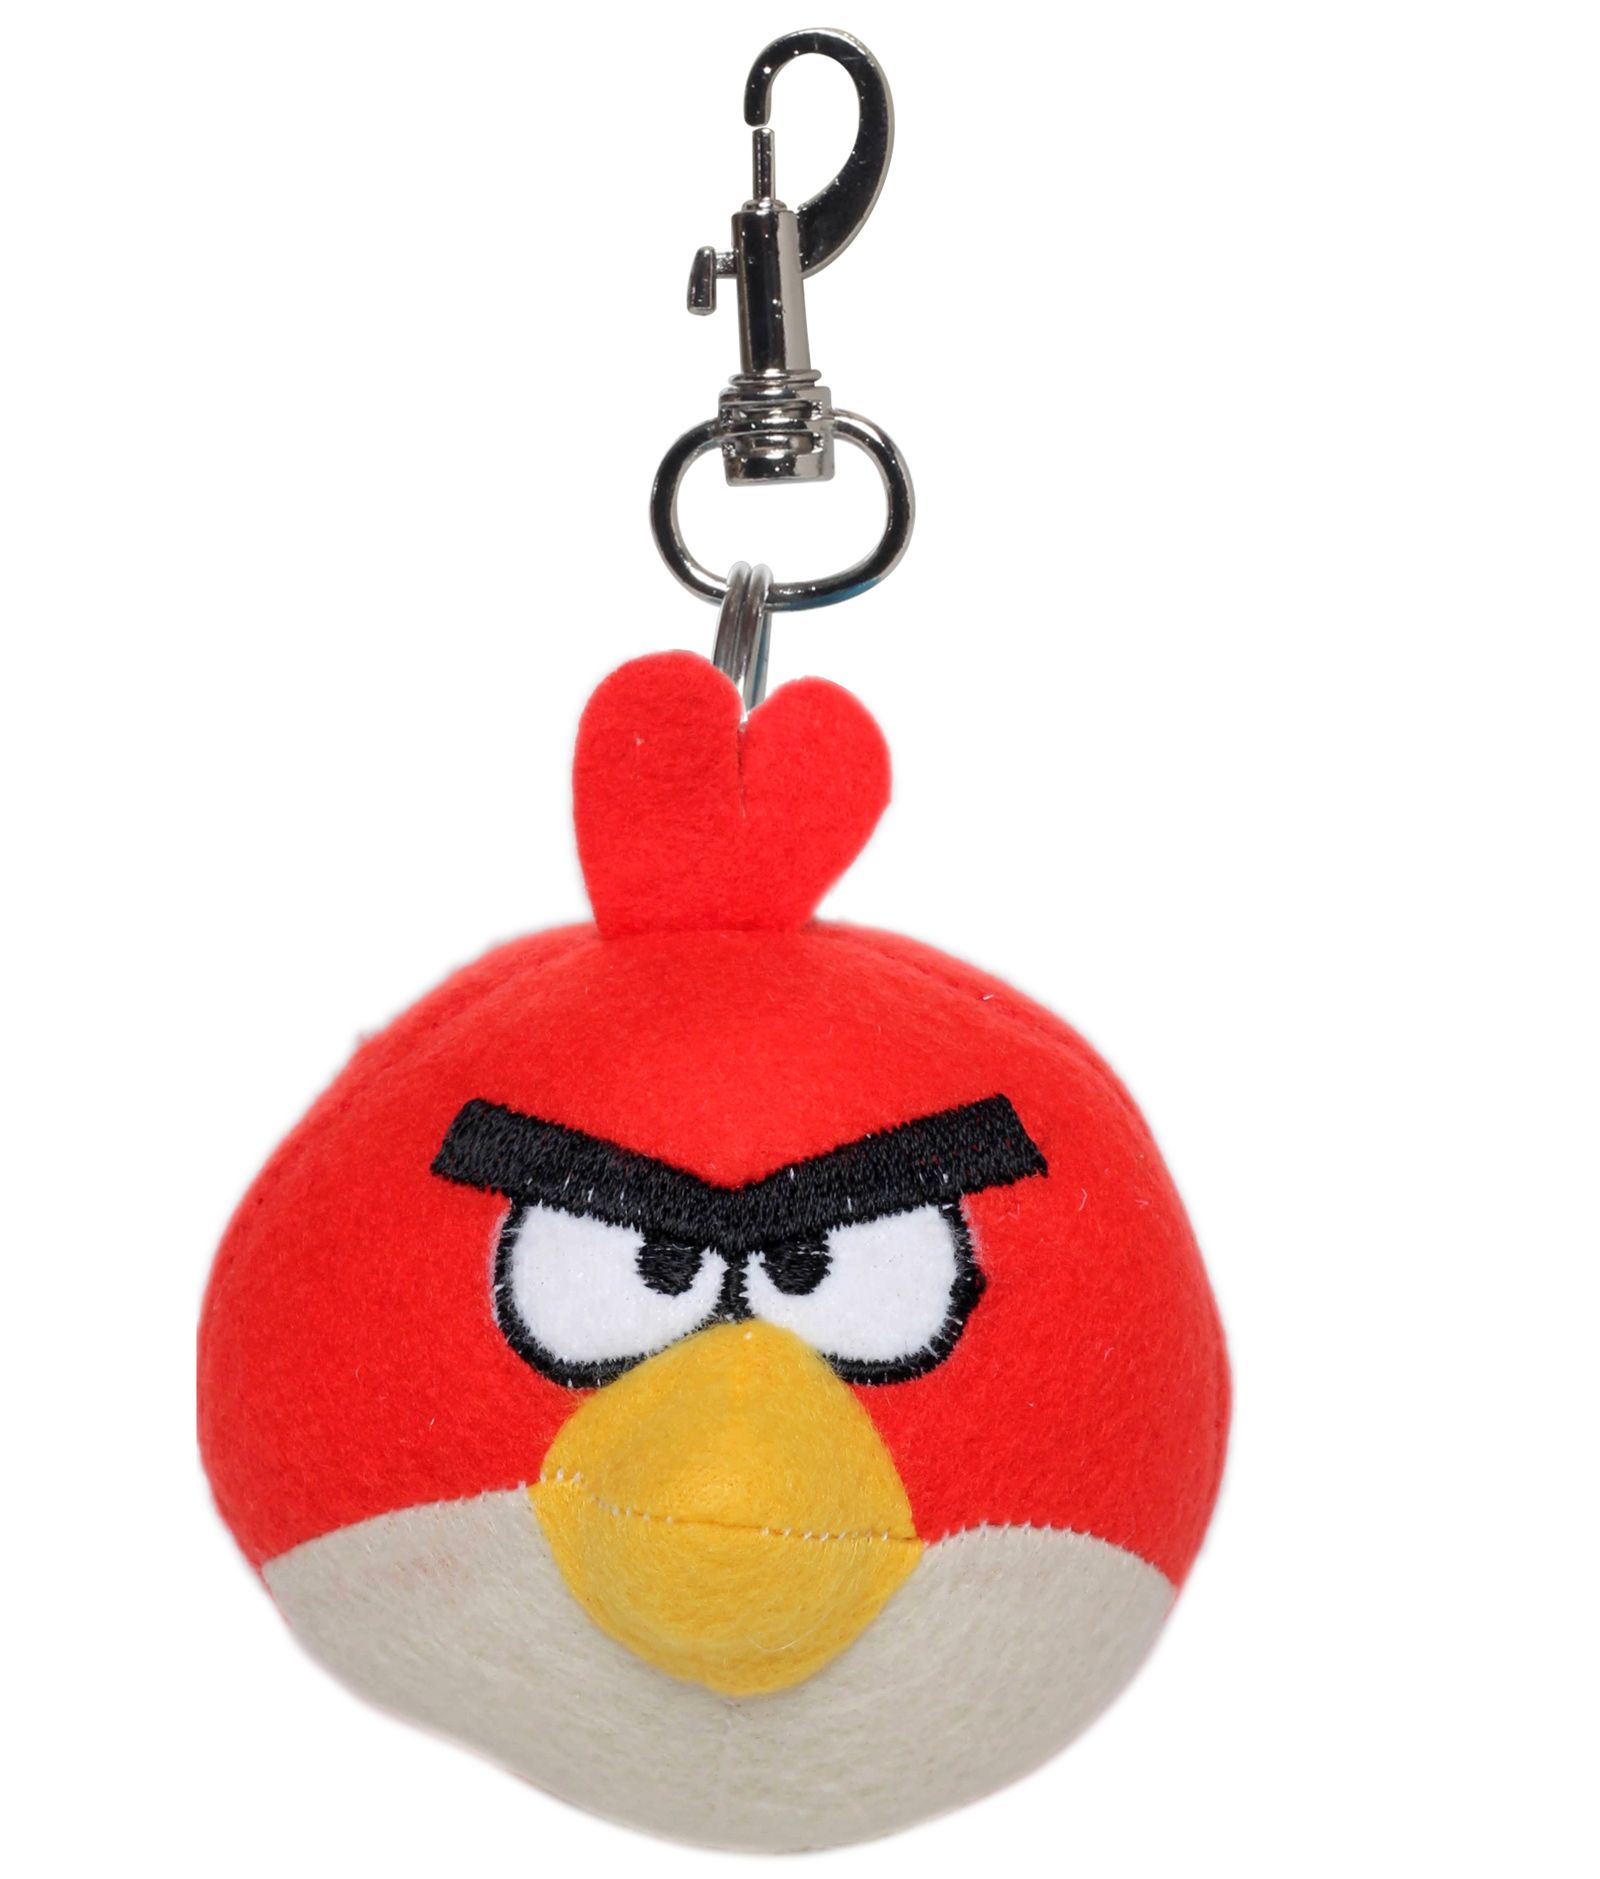 Angry Bird - Angry Red Bird Key Chain